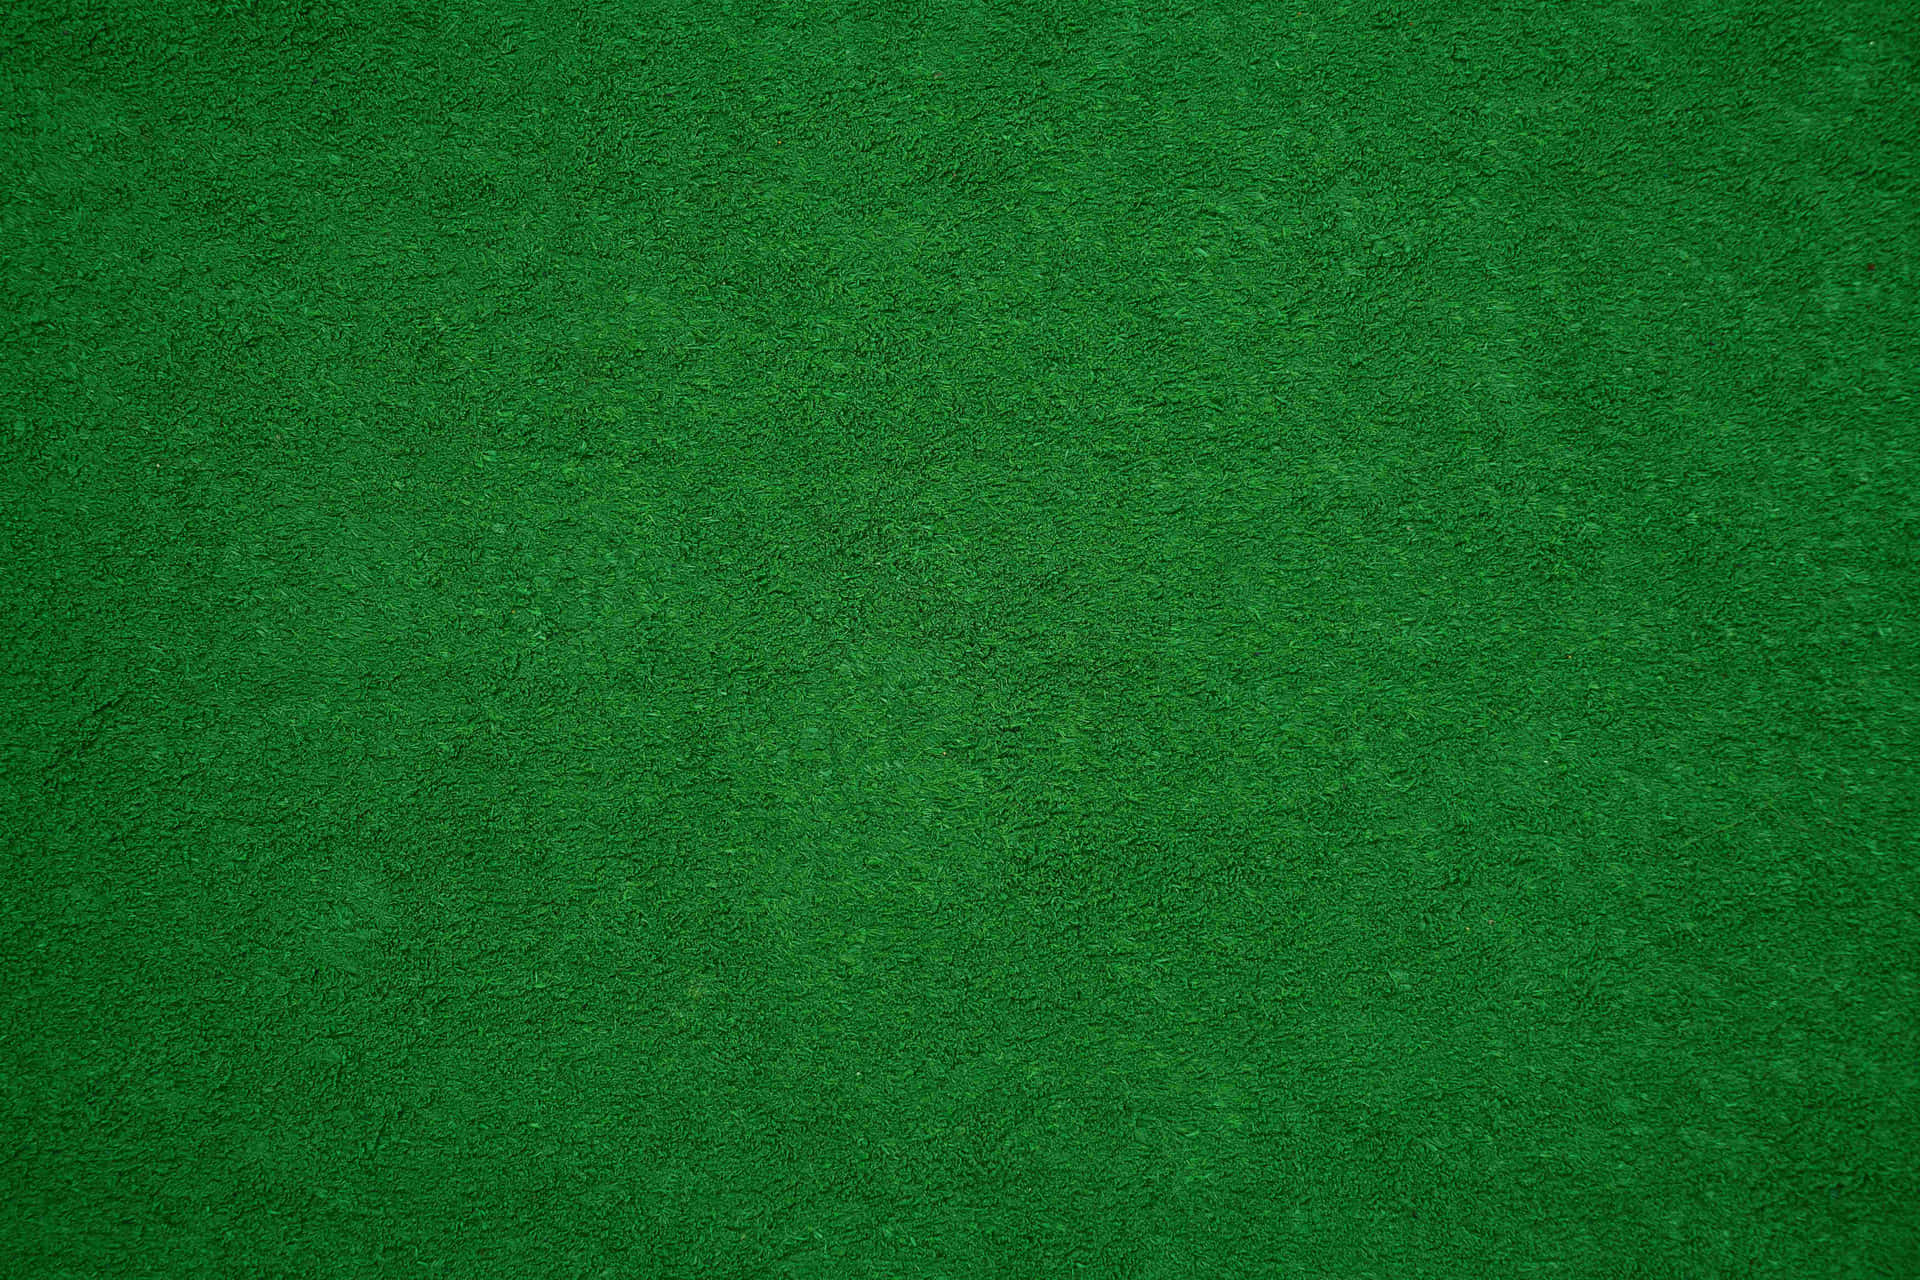 Enkelgrön Filttyg-textur Som Bakgrund.